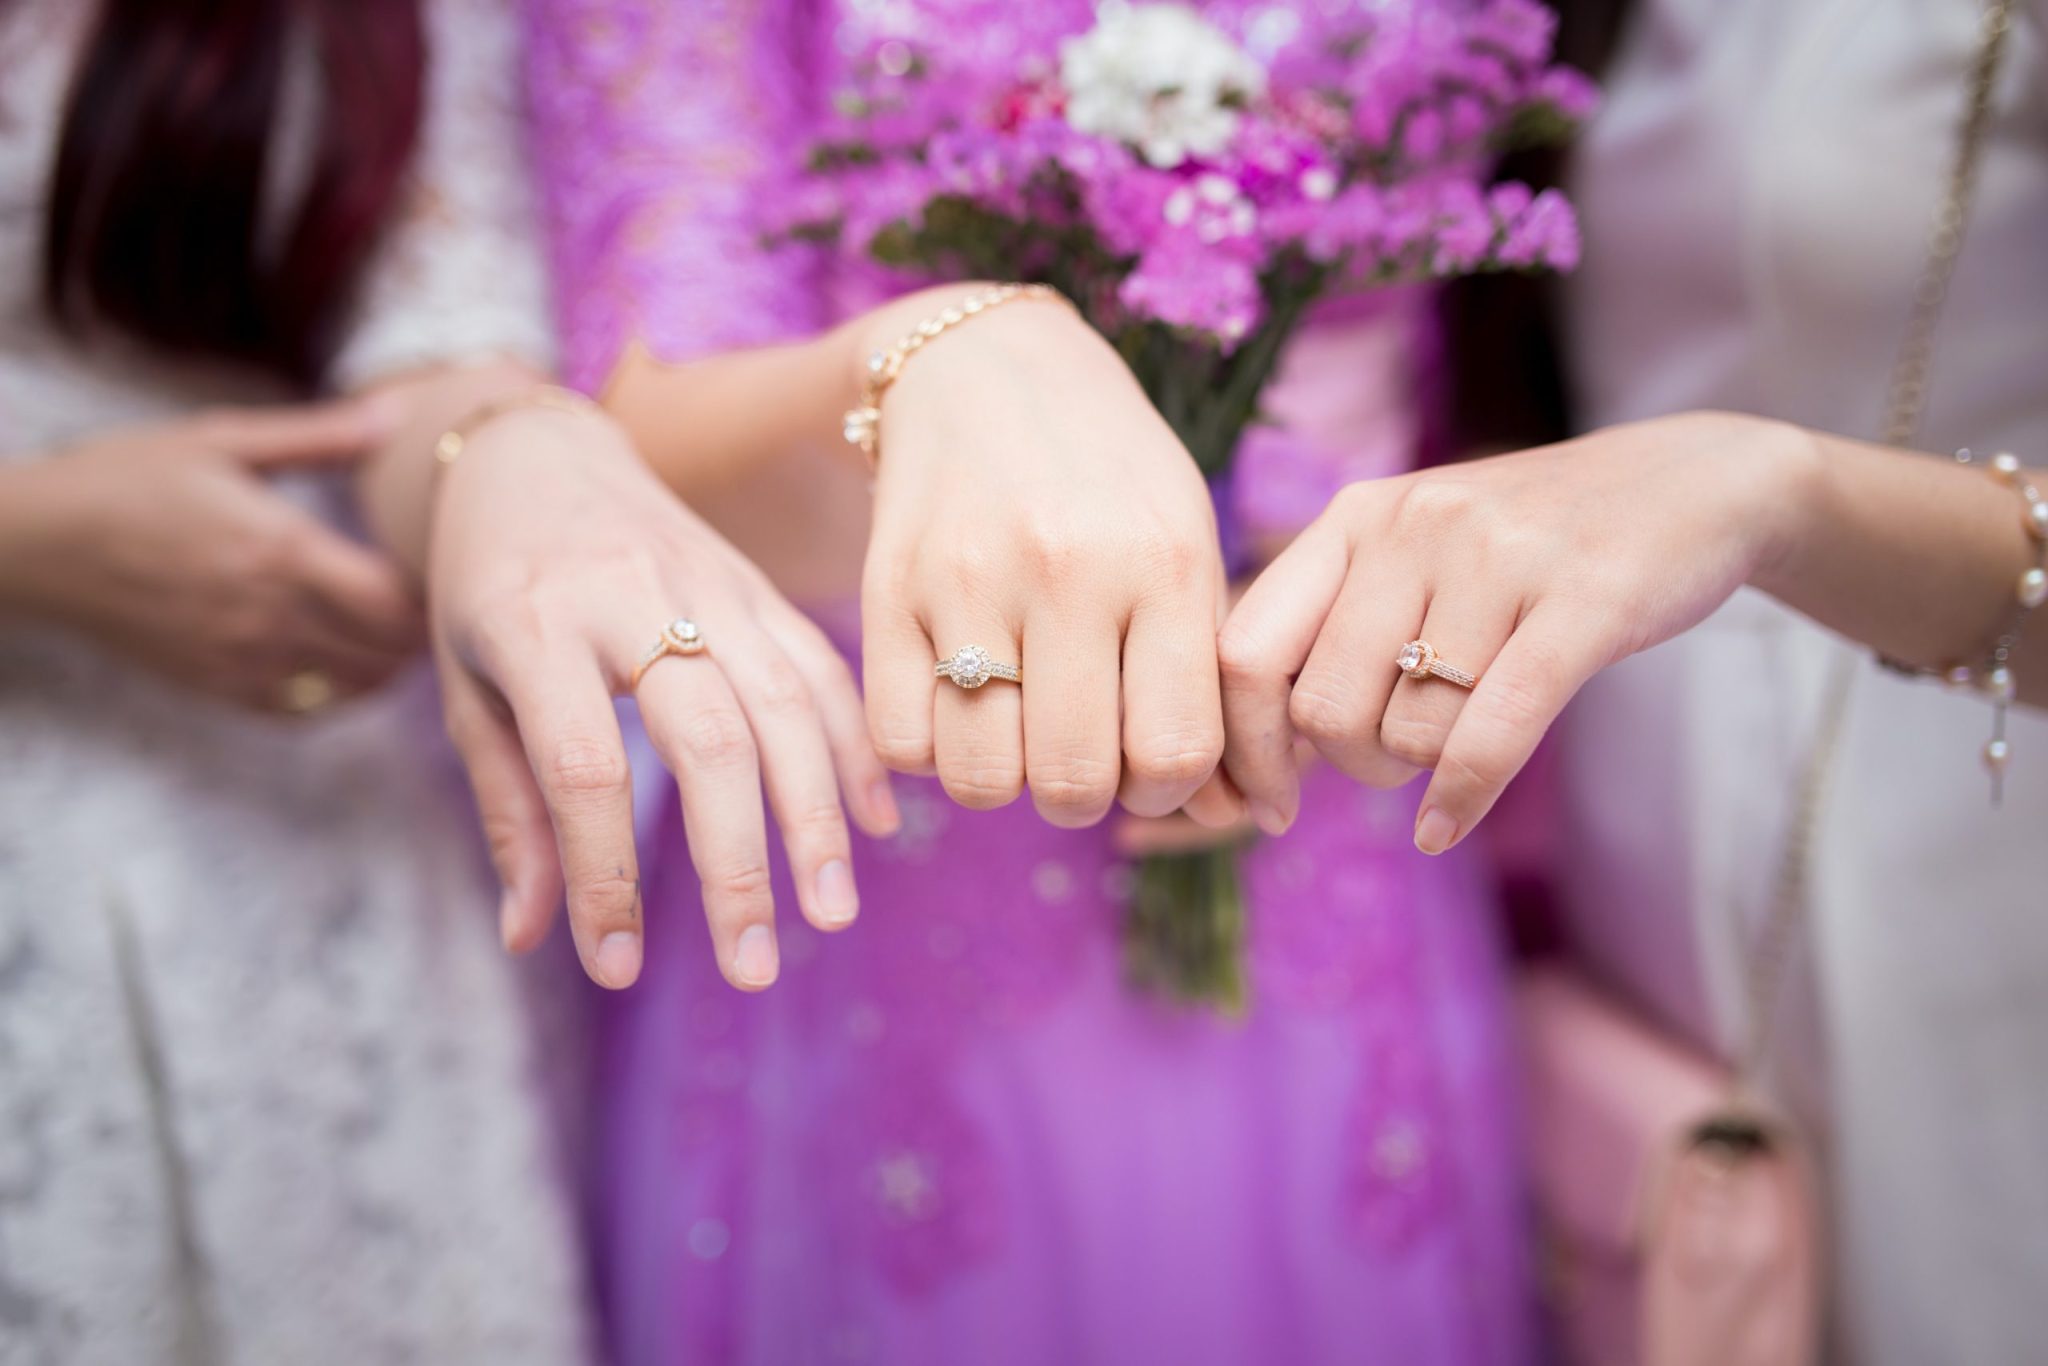 Wedding Ring for Women